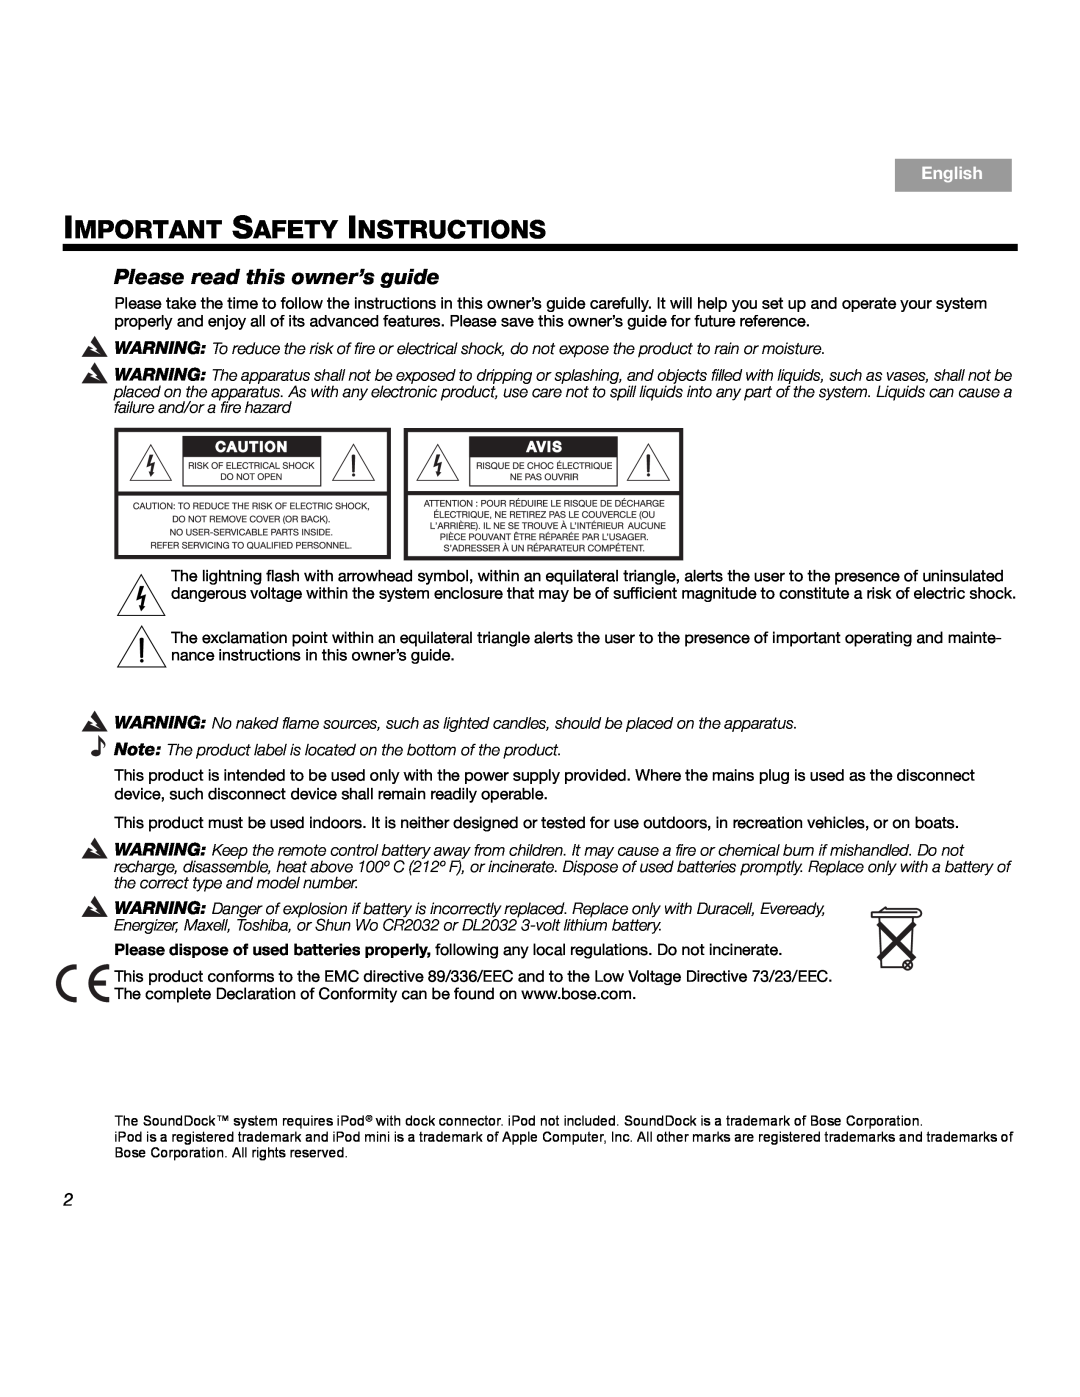 Bose SOUNDDOCKTM Important Safety Instructions, Please read this owner’s guide, Svenska, Nederlands, Italiano, Français 